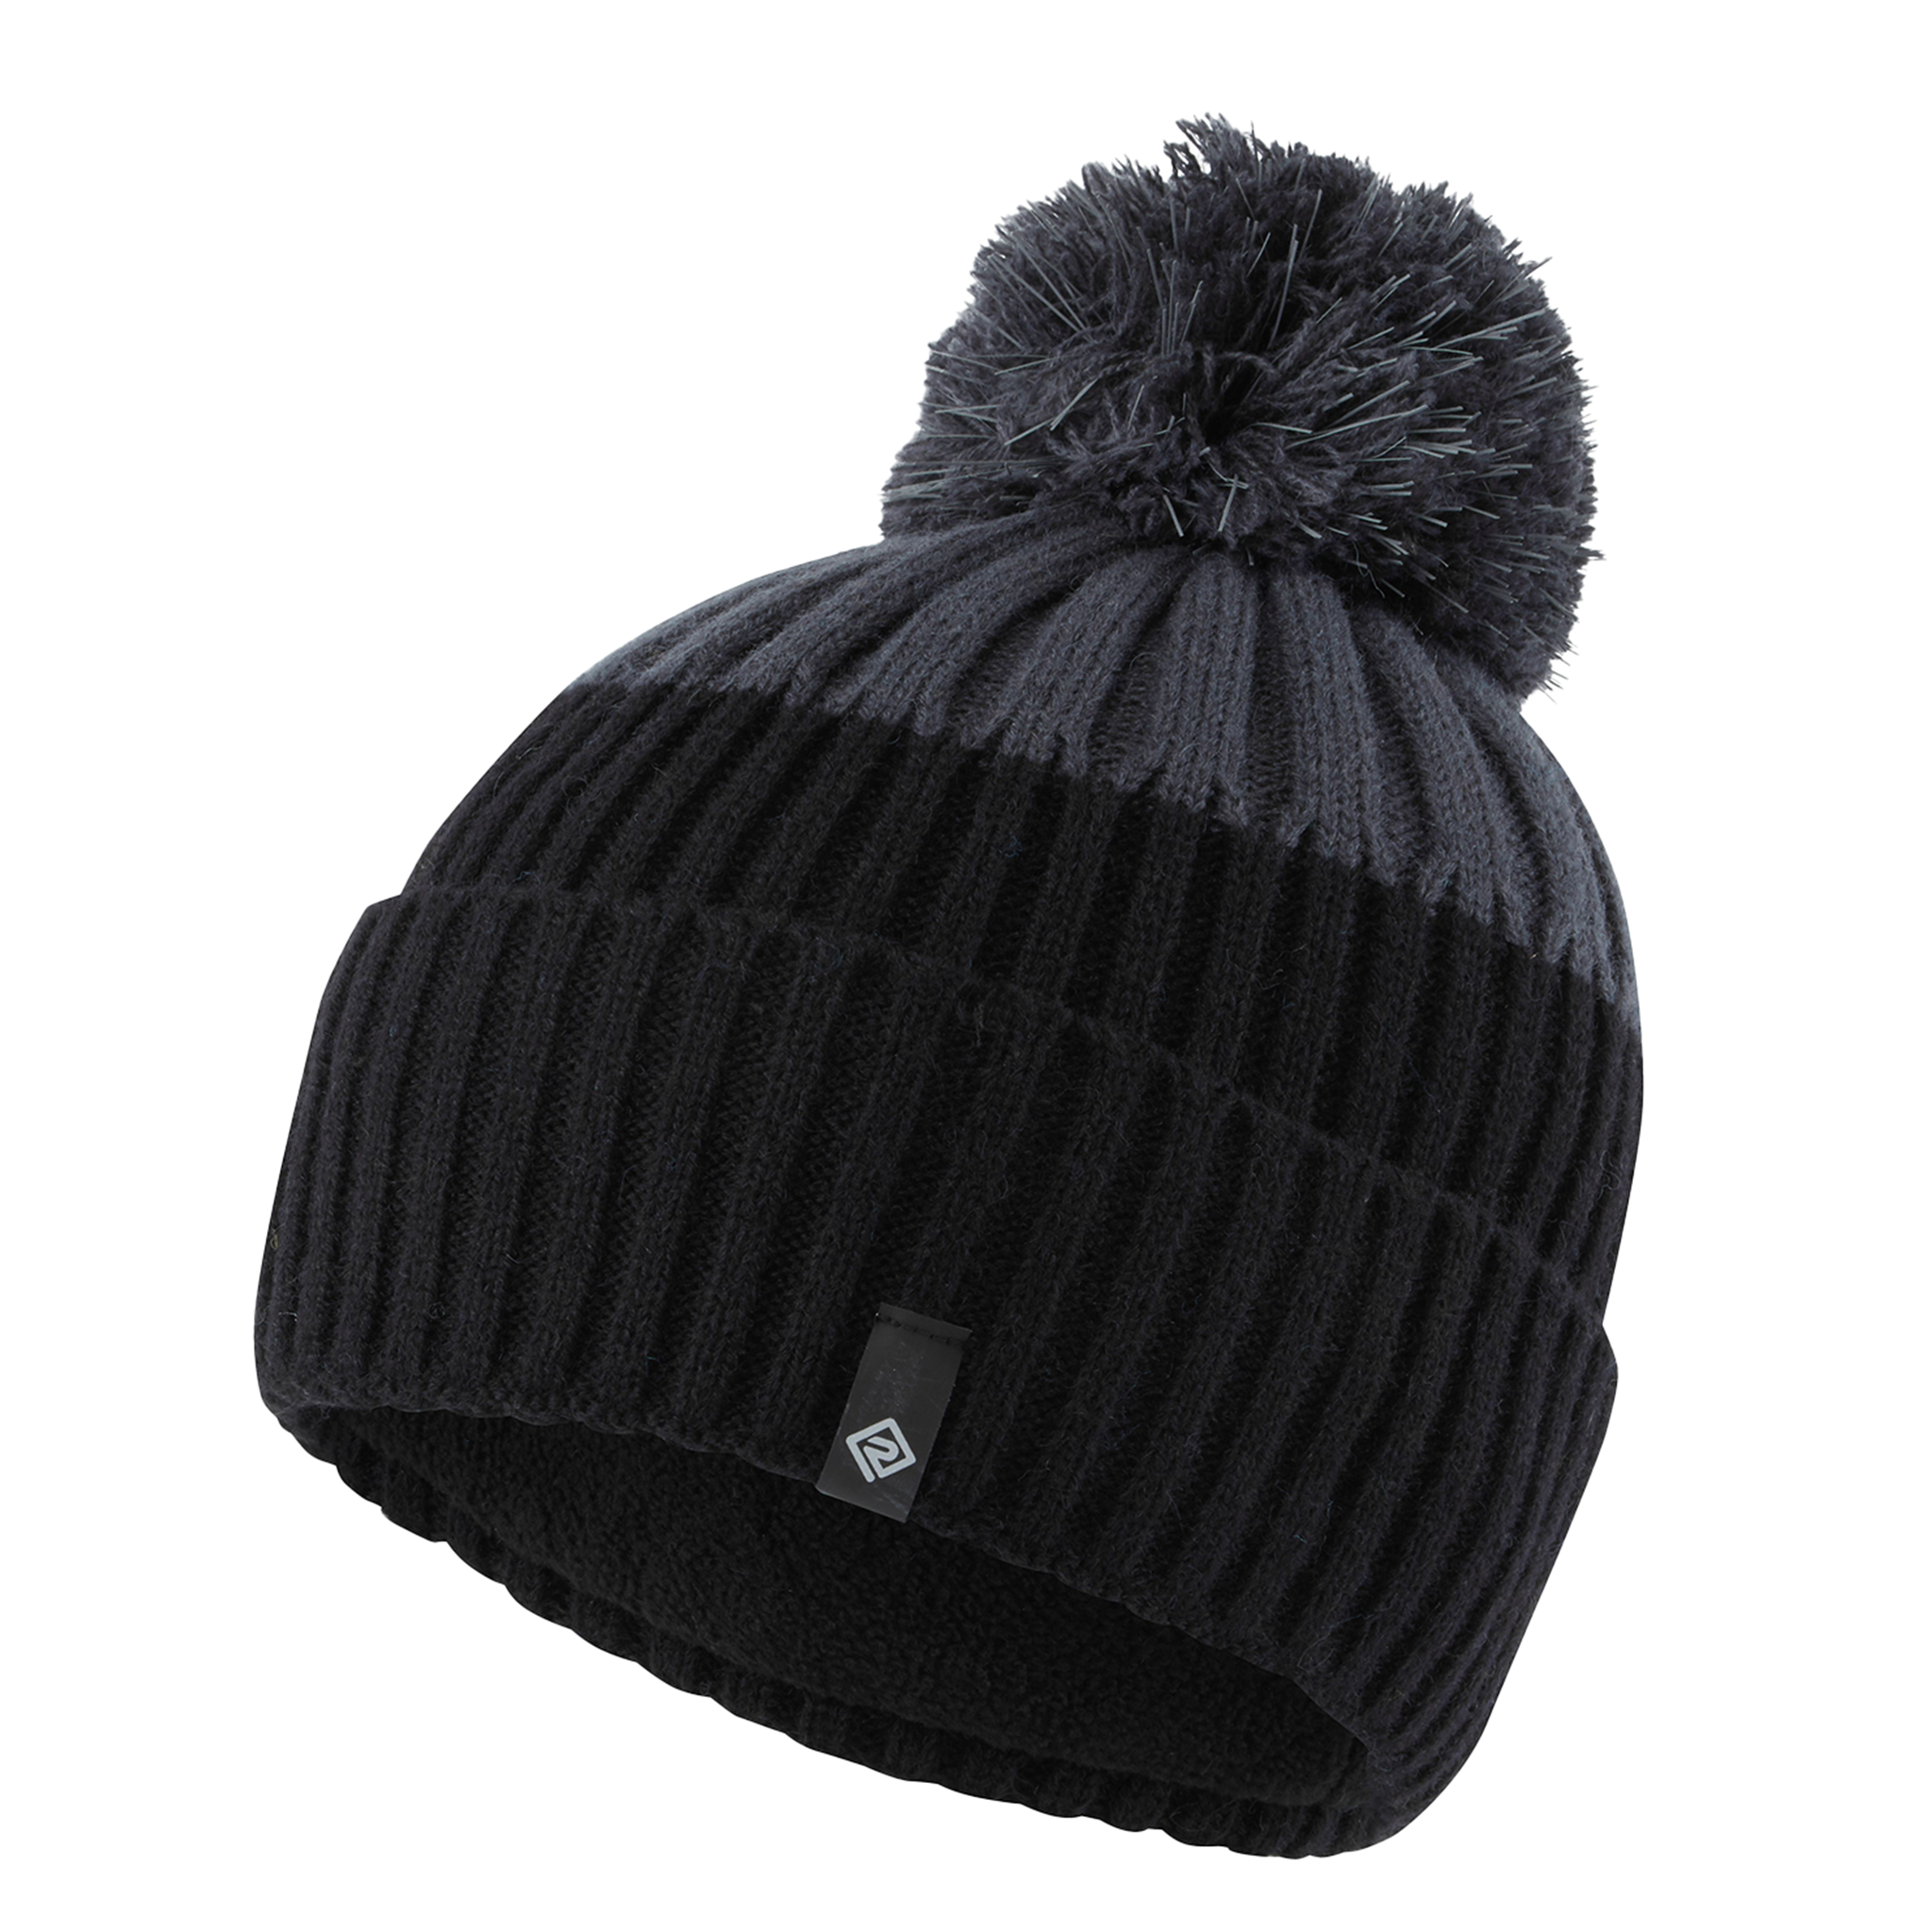 RonHill Bobble Hat - Black/Charcoal